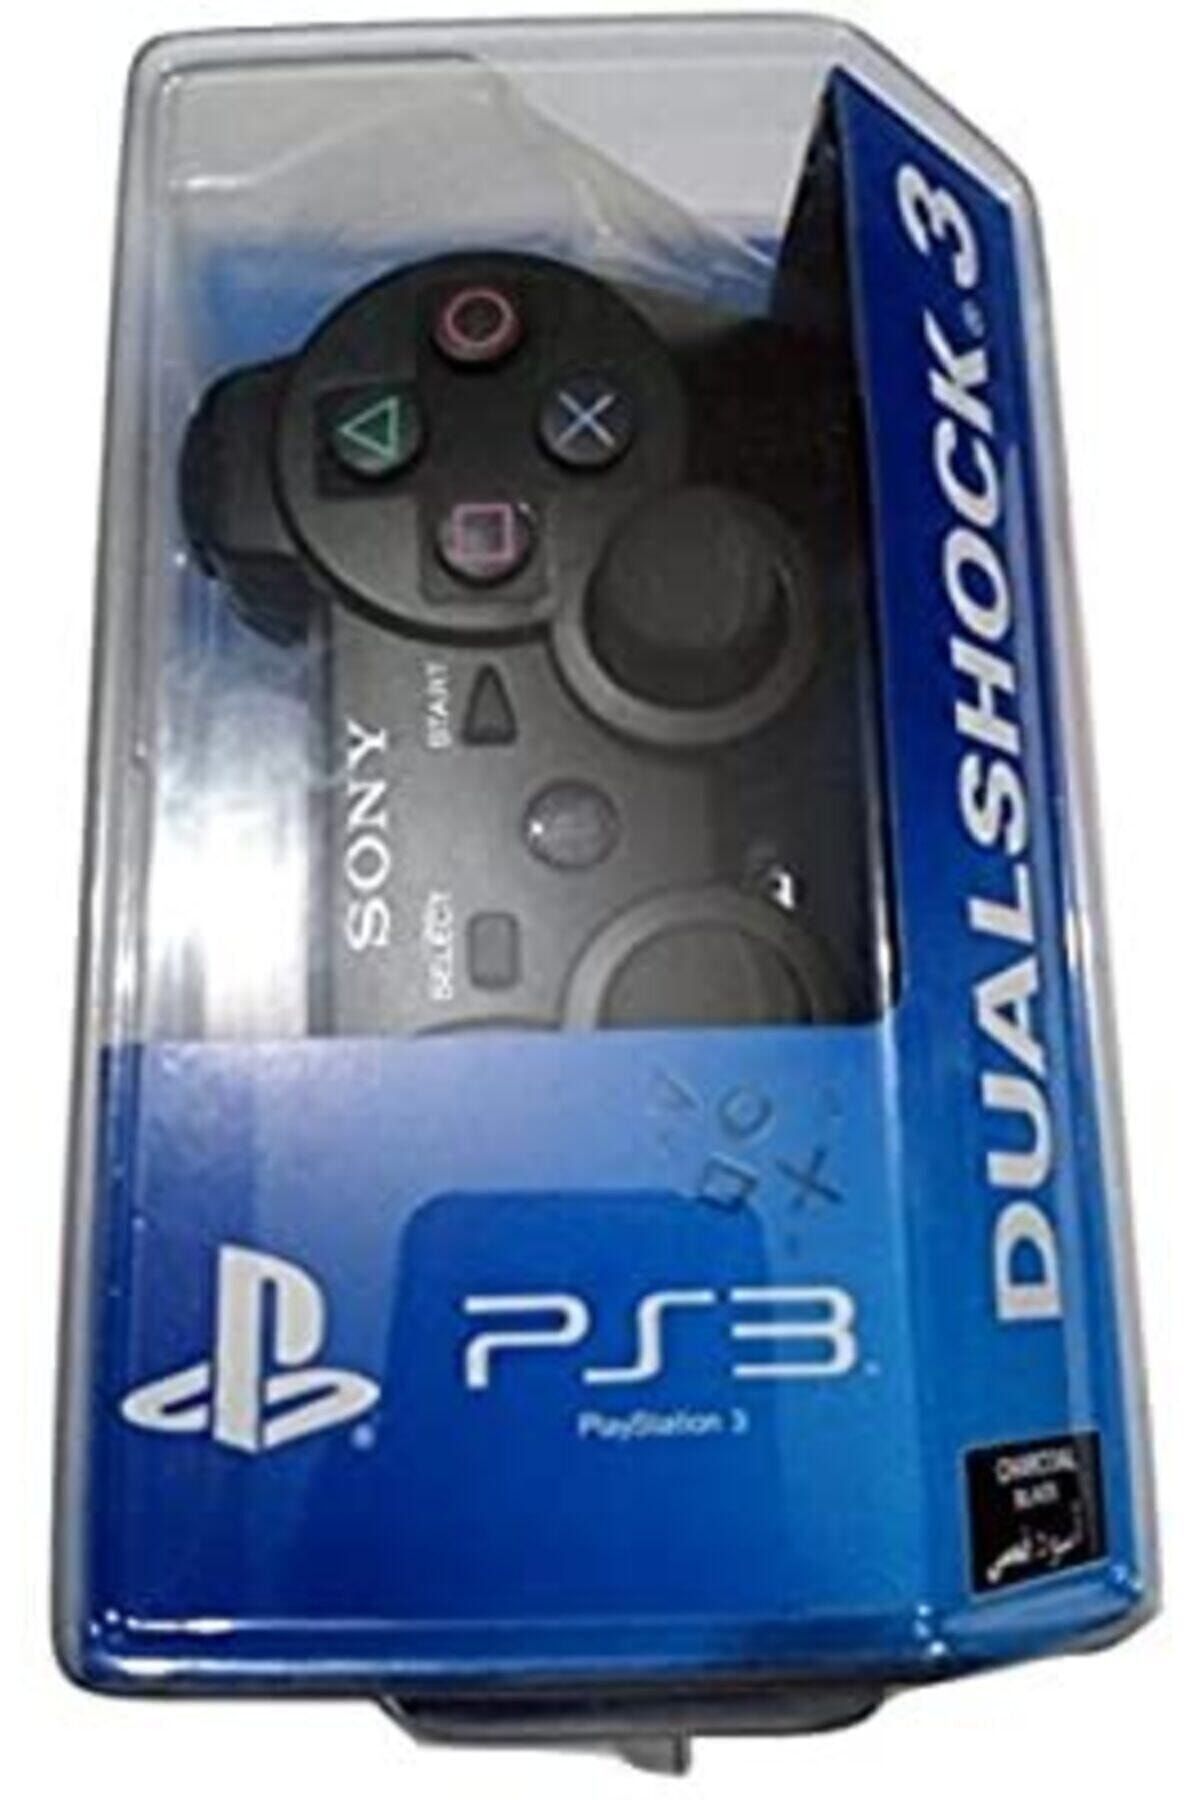 HERSEY TAHTAKALEDEN Sony Ps3 Dualshock 3 %100 Orjinal Kablosuz Oyun Kolu TYC00041869962